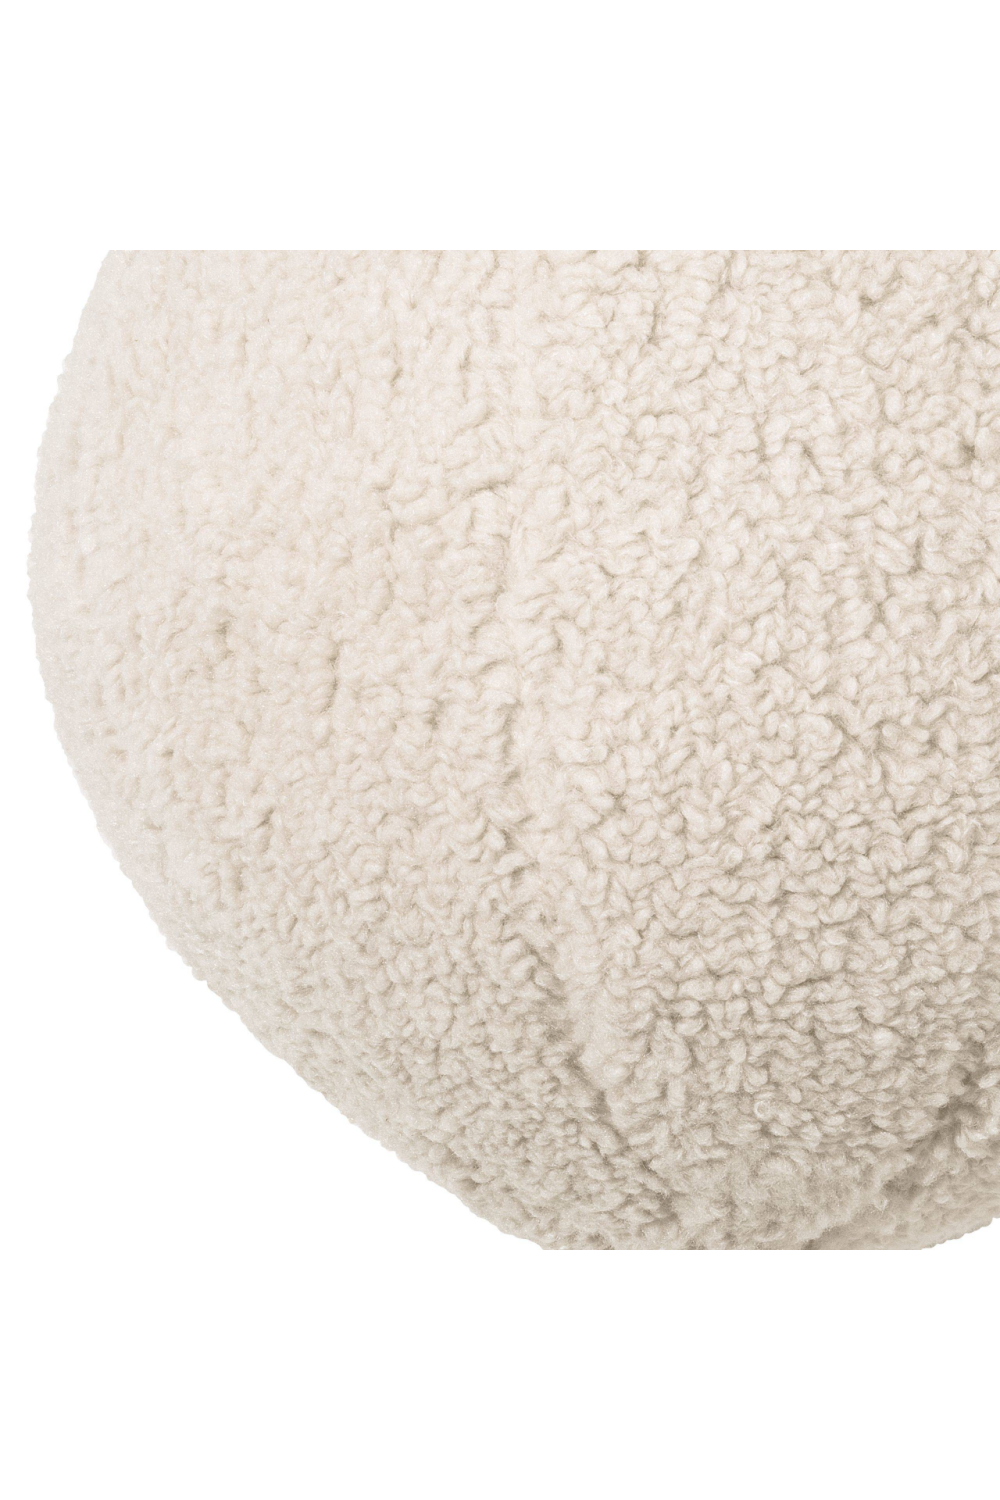 Brisbane Cream Ball Pillow | Eichholtz Palla S | OROA